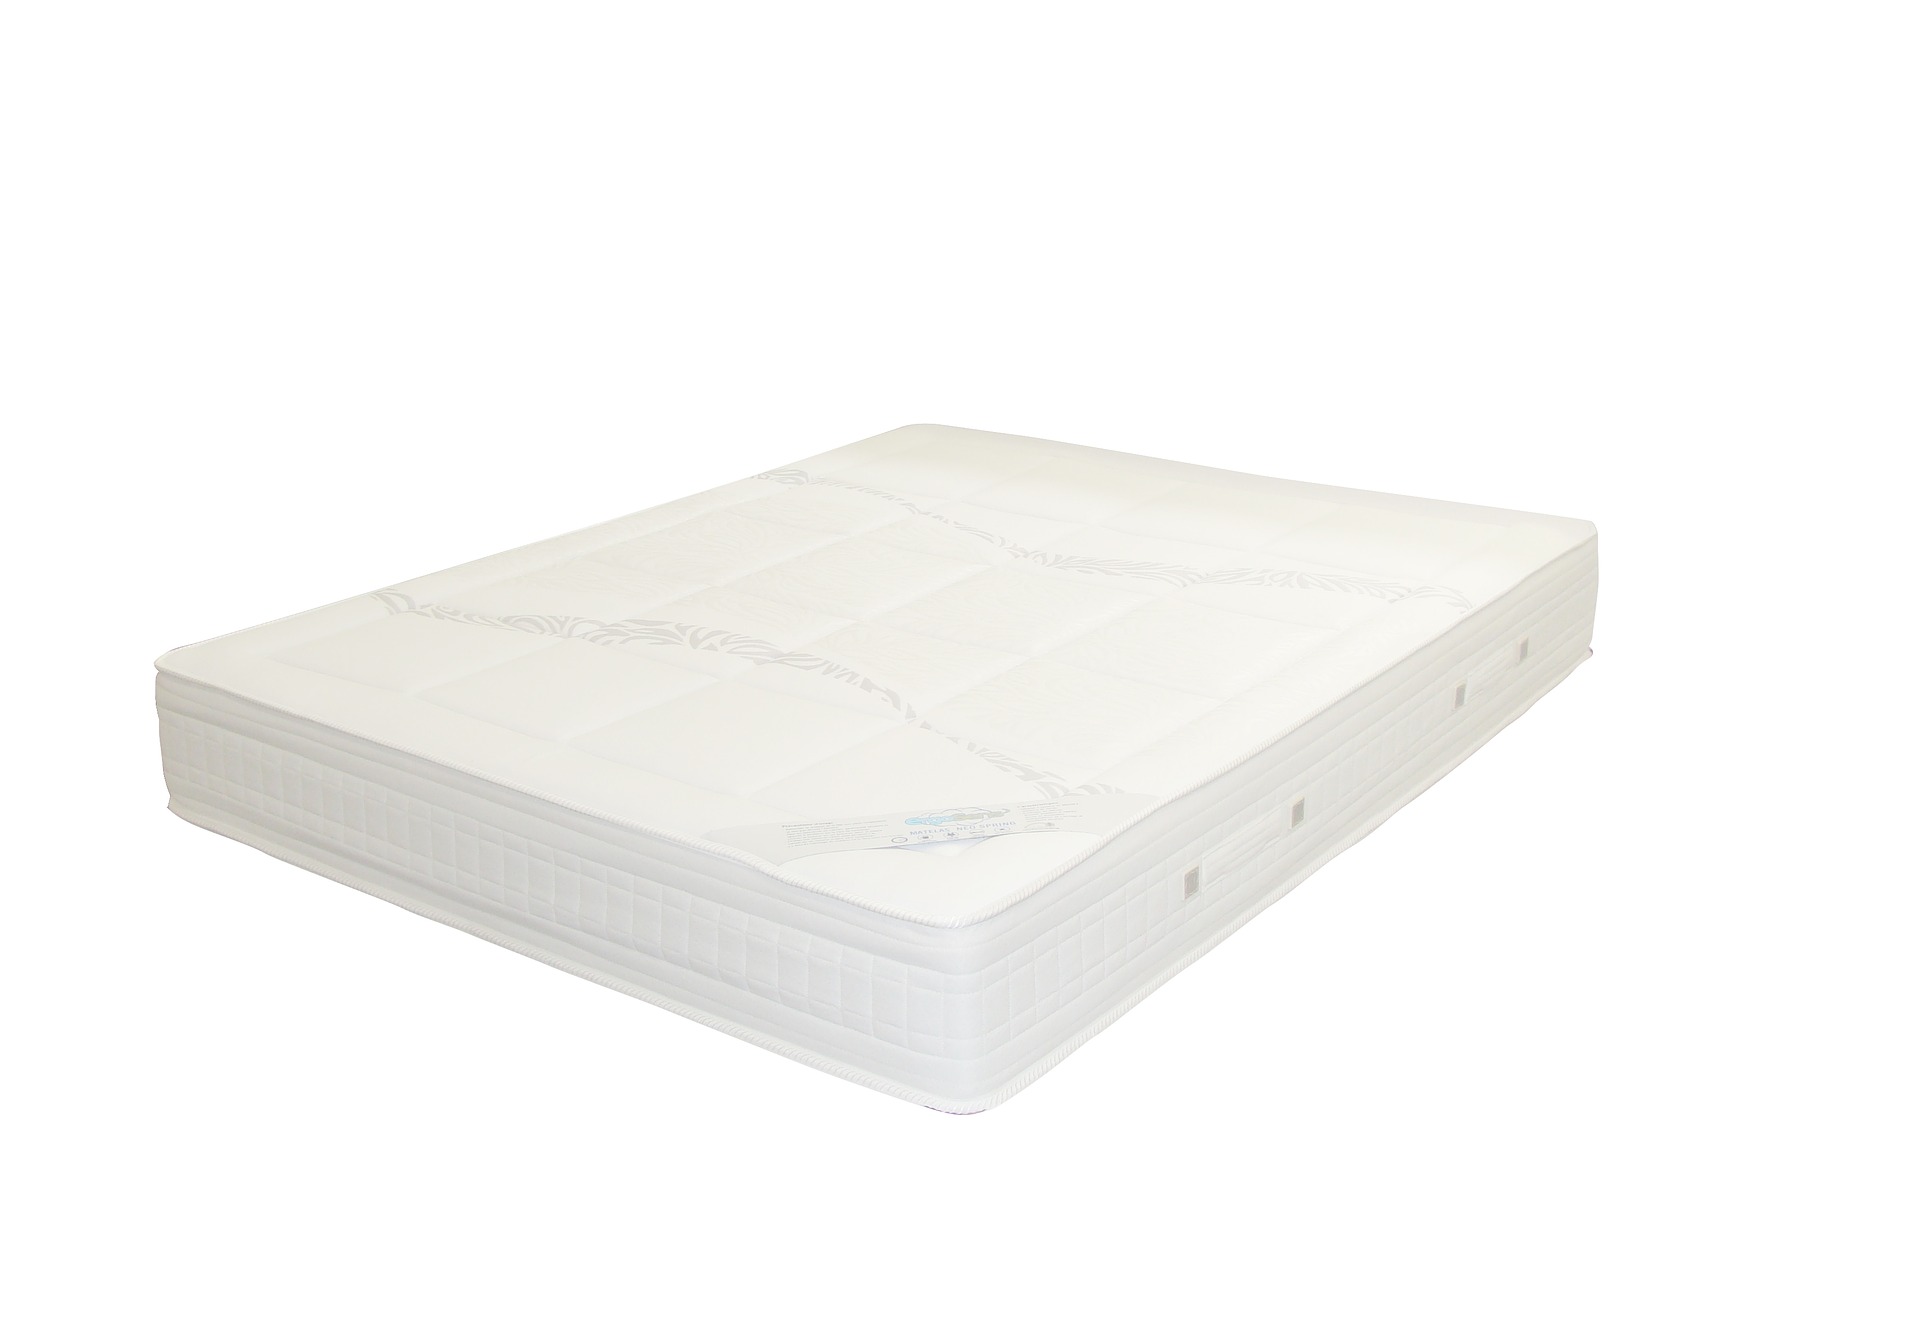 cape cod mattress review